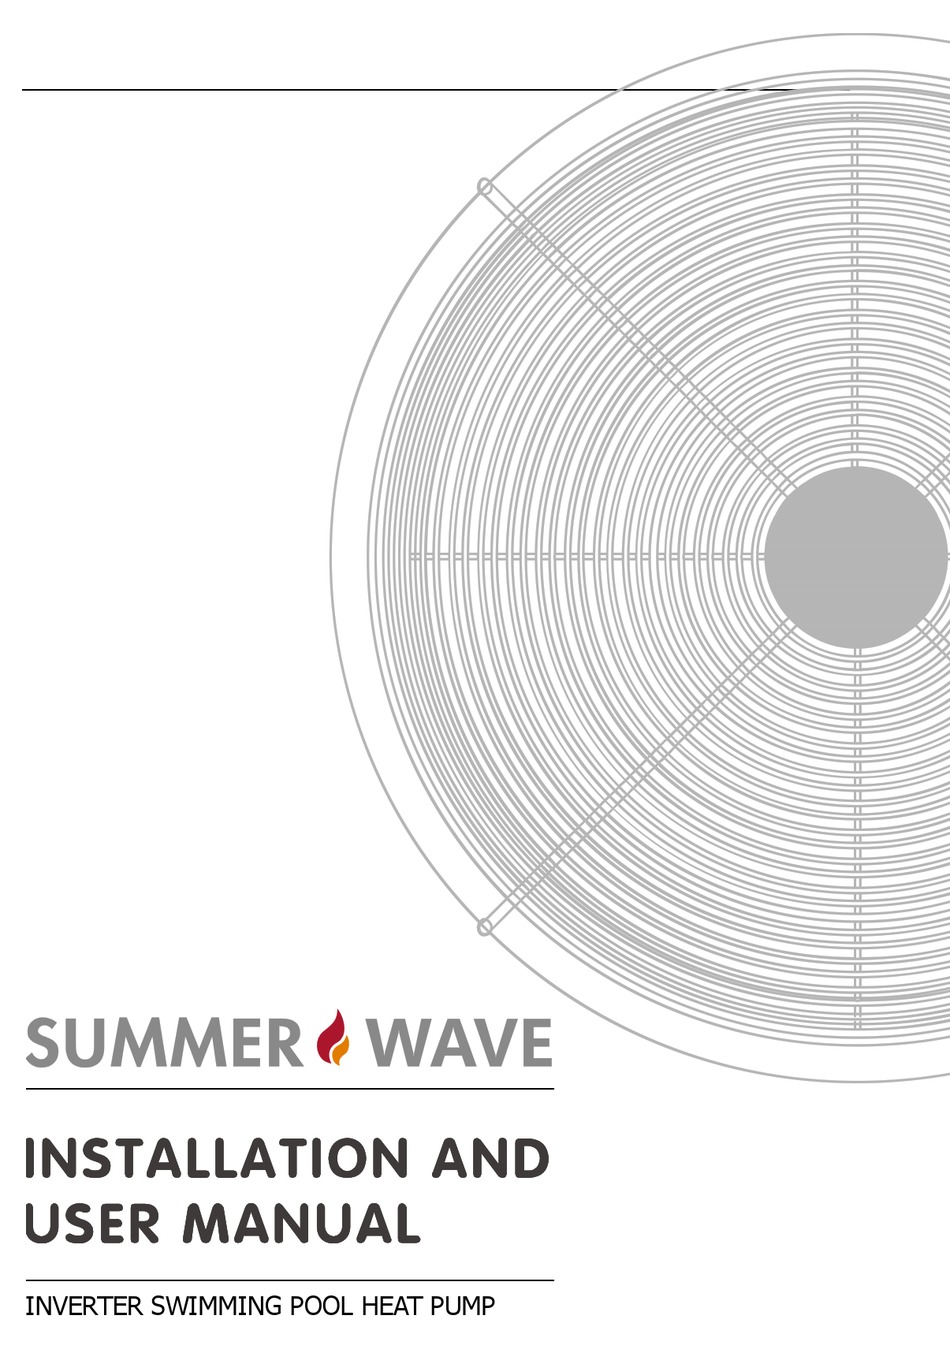 SUMMER WAVES 6.5 SI INSTALLATION AND USER MANUAL Pdf Download ManualsLib